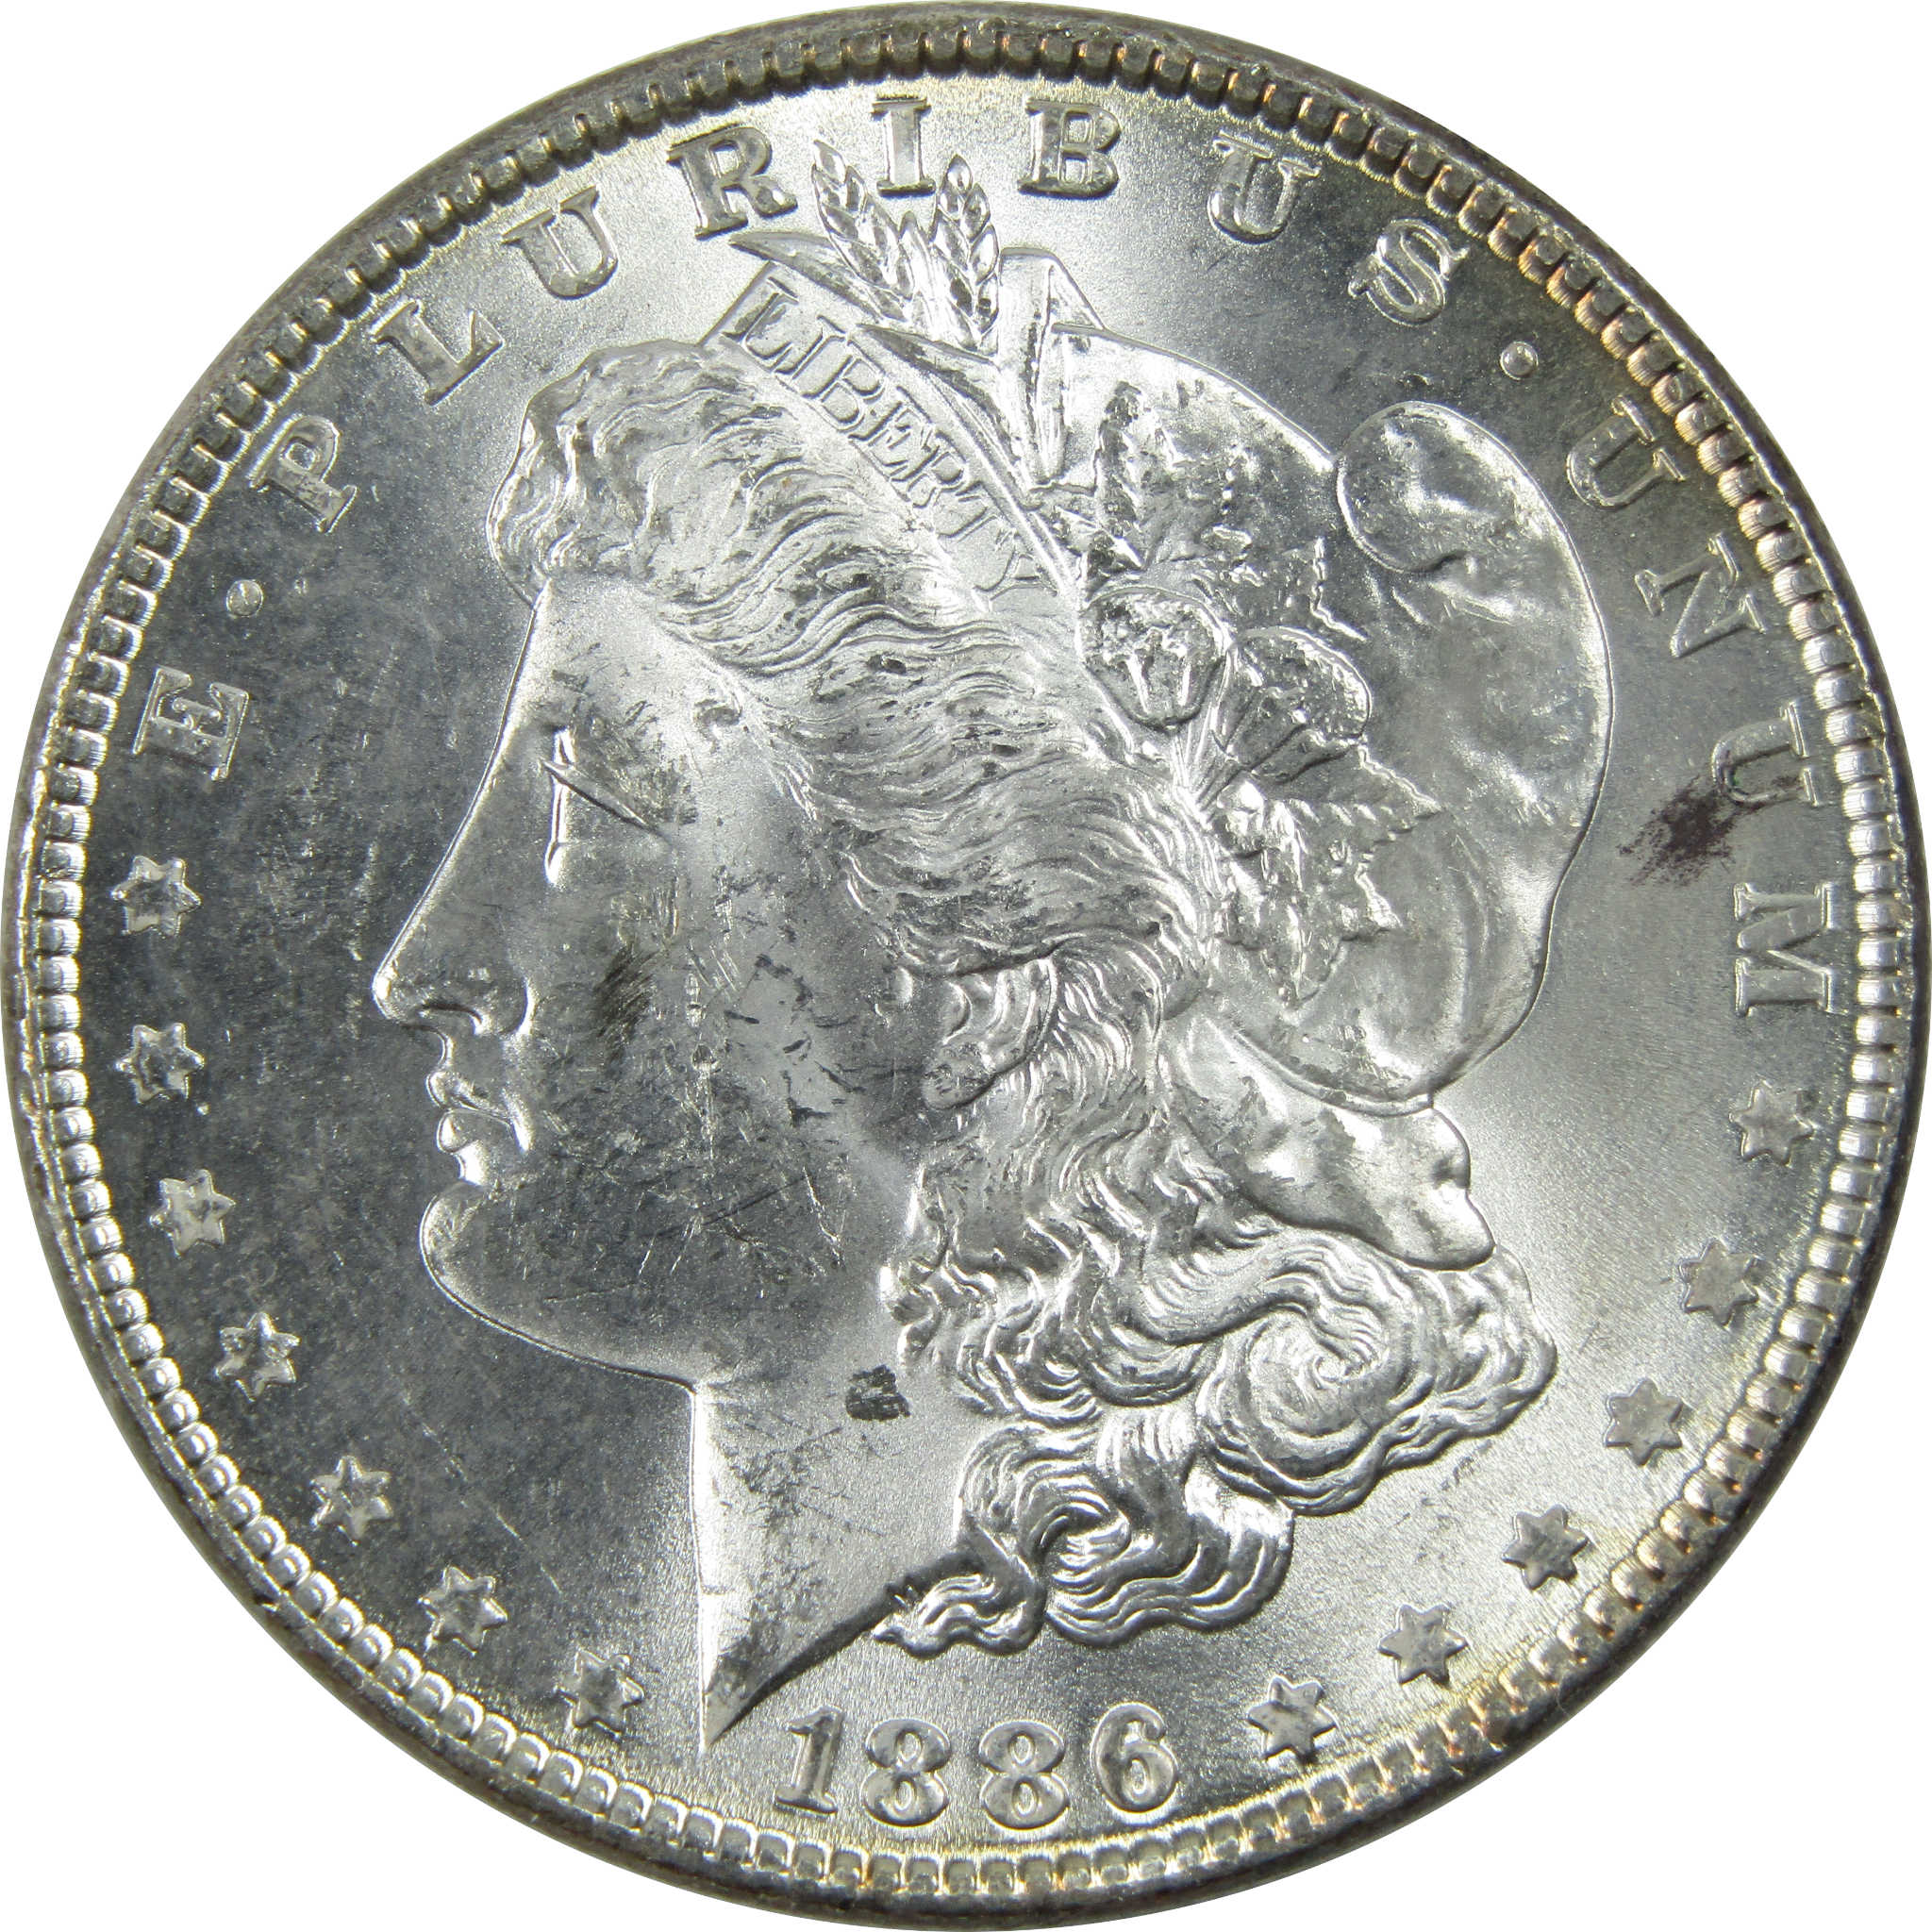 1886 Morgan Dollar Uncirculated Silver $1 Coin SKU:I13424